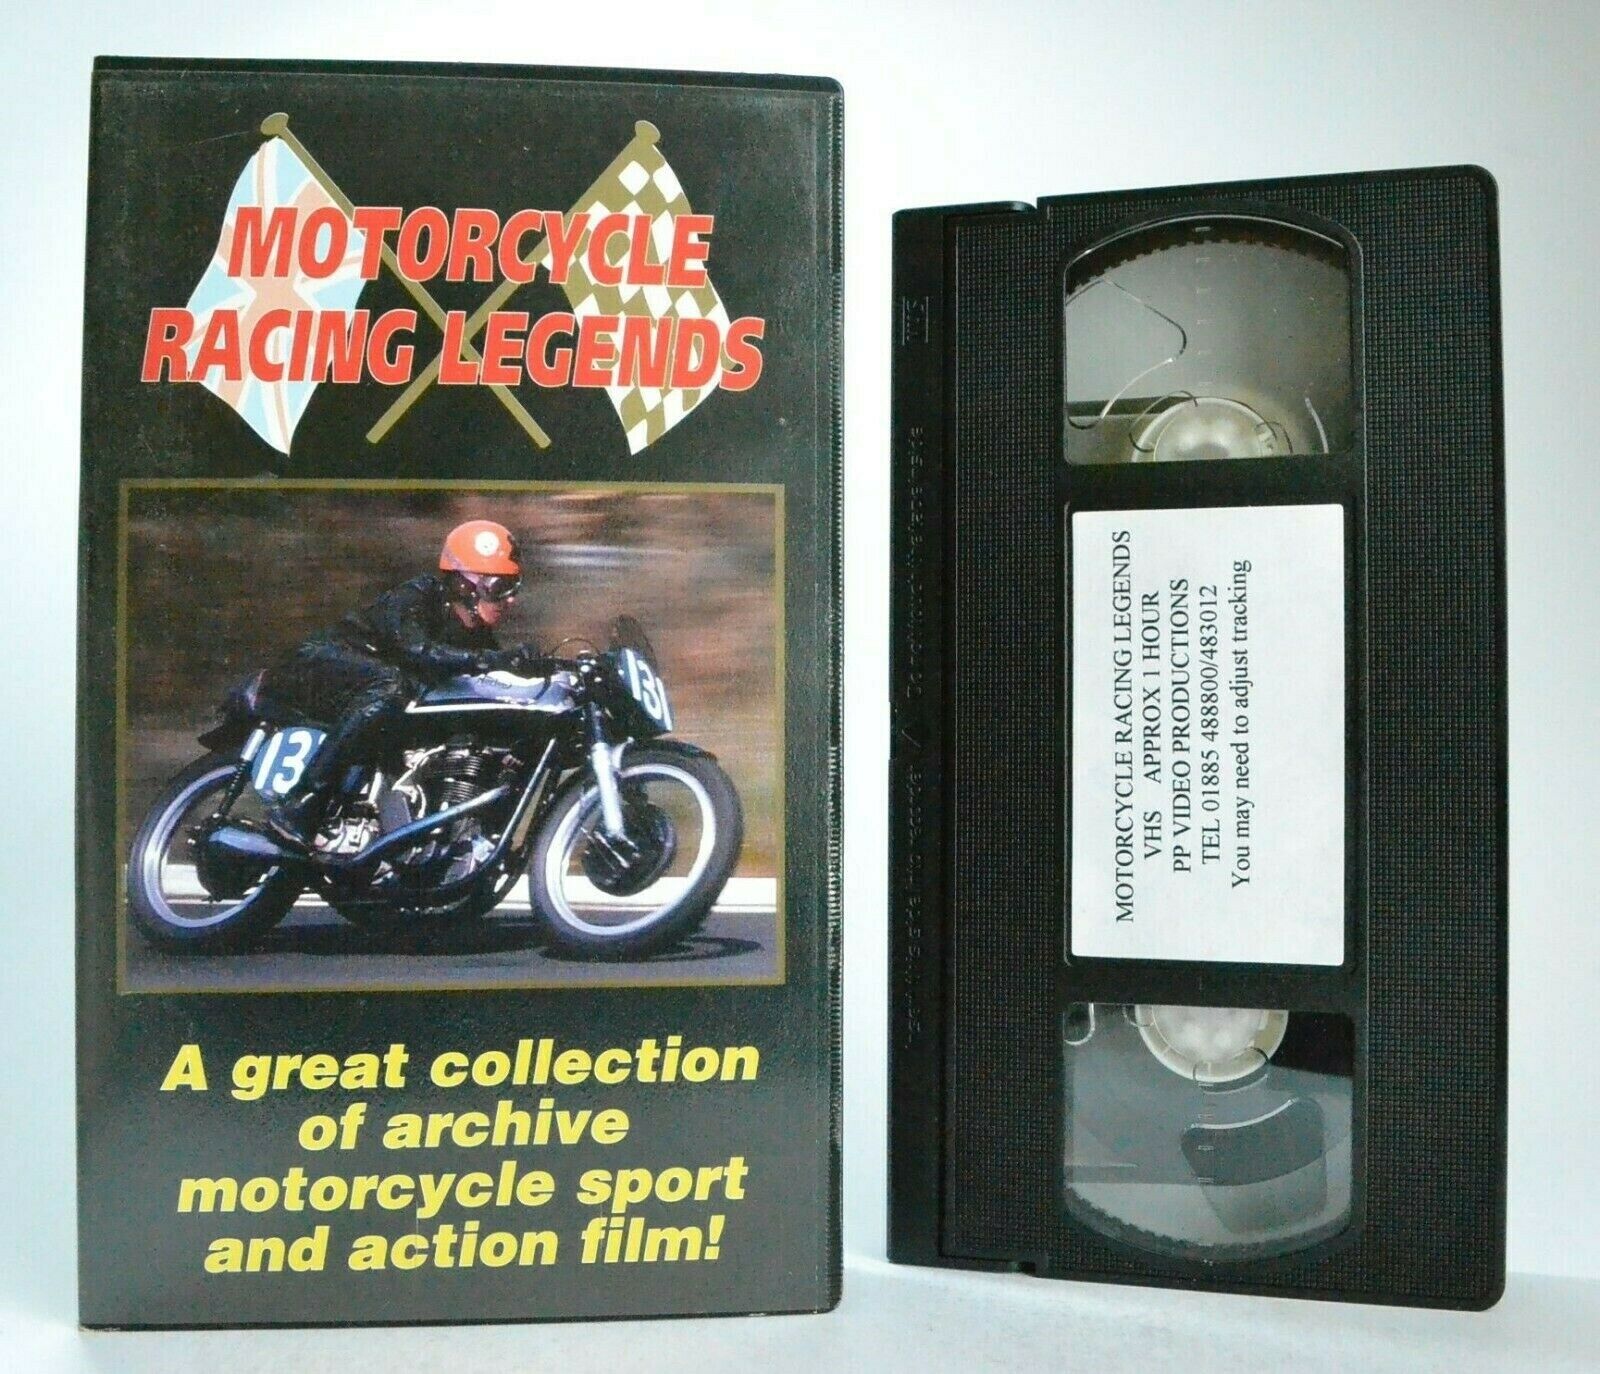 Motorcycle Racing Legends: Vintage Motorcycling Vol.1 - Motorsports - Pal VHS-